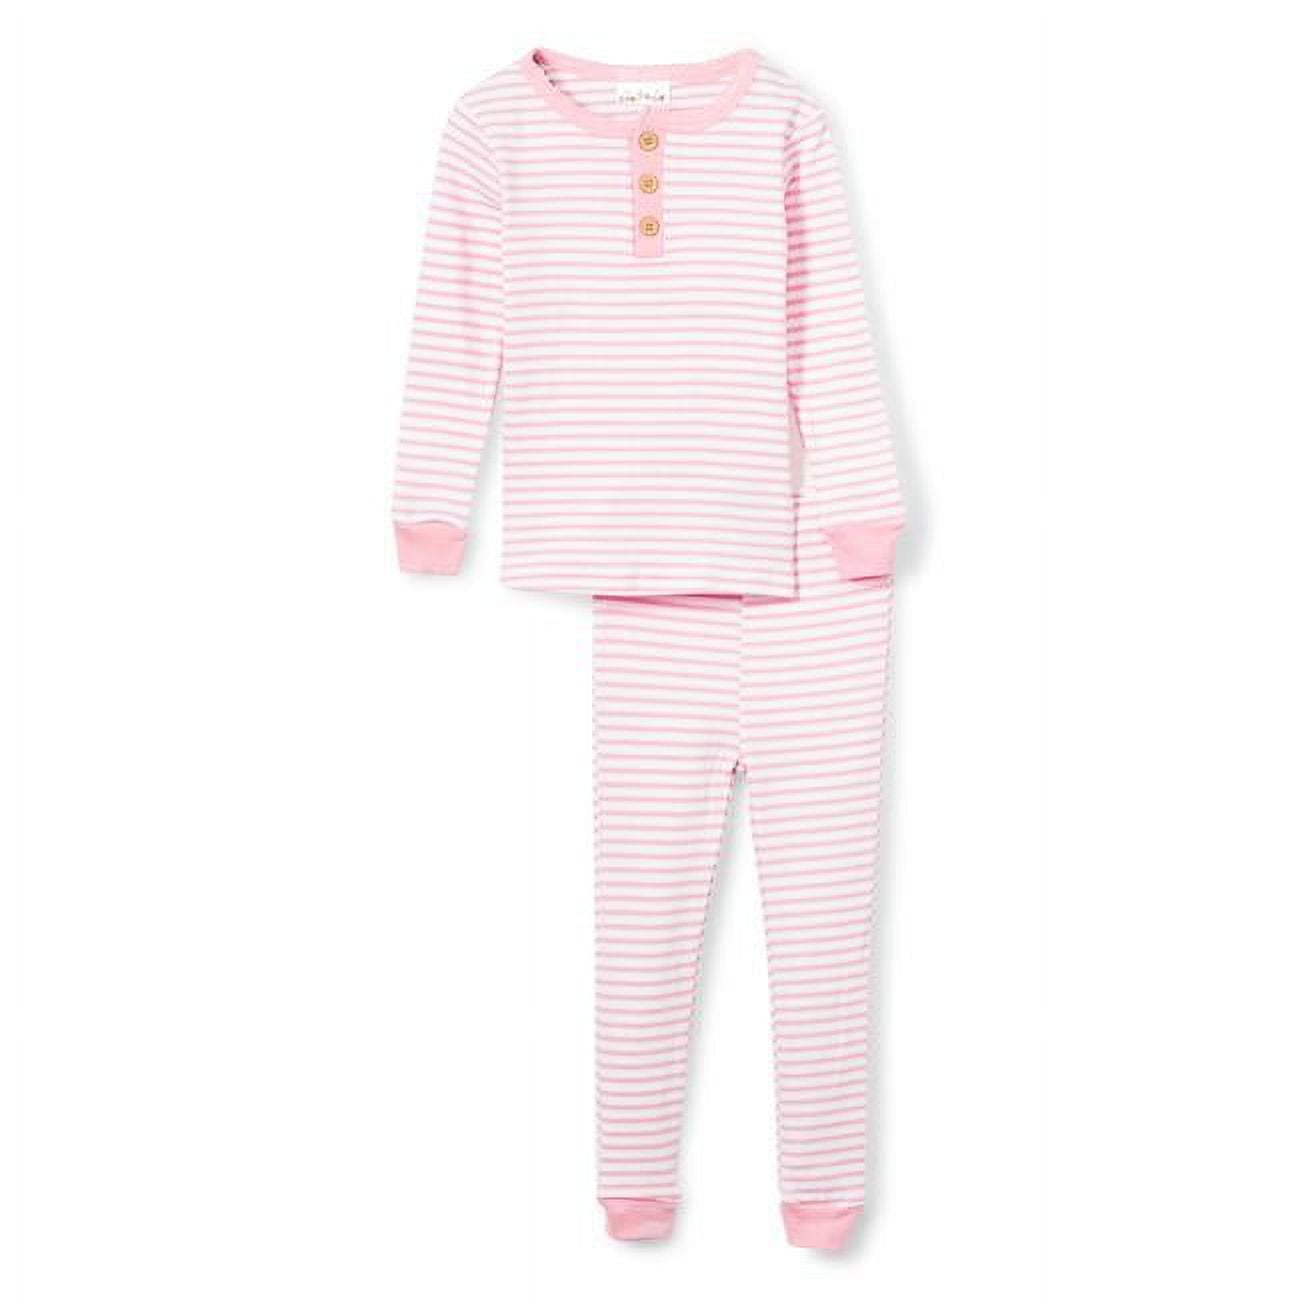 2363902 Baby Girls Long Sleeve Stripe Pajamas, Pink & White - Size 12-24M - Case of 24 -  Sweet & Soft